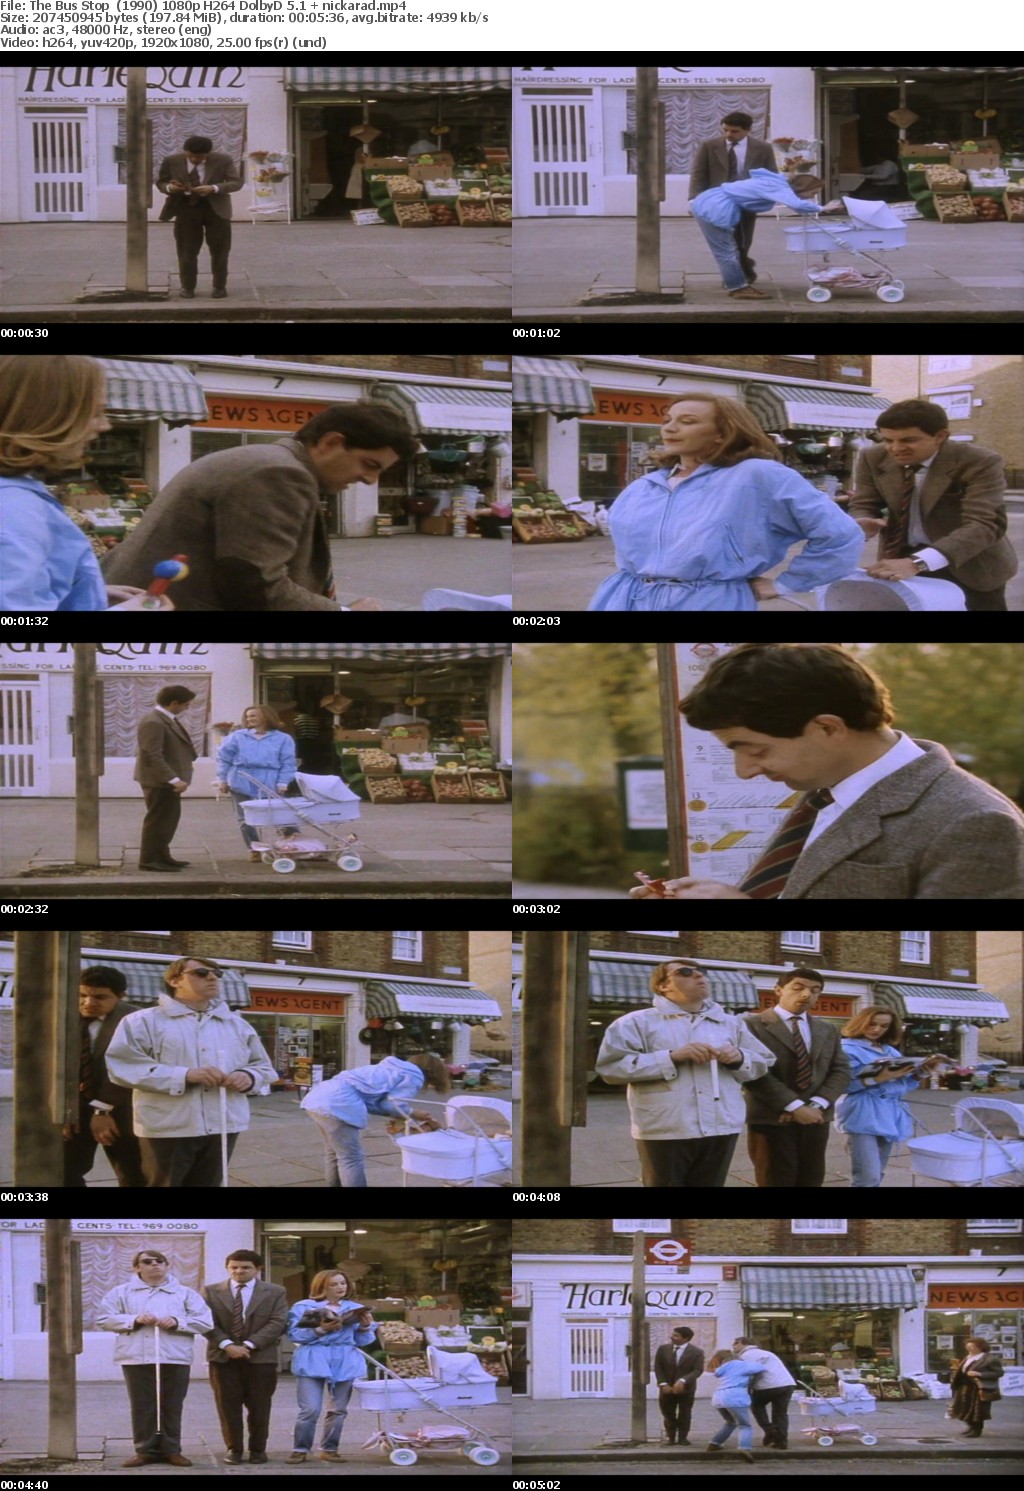 The Bus Stop (1990) 1080p H264 DolbyD 5 1 nickarad